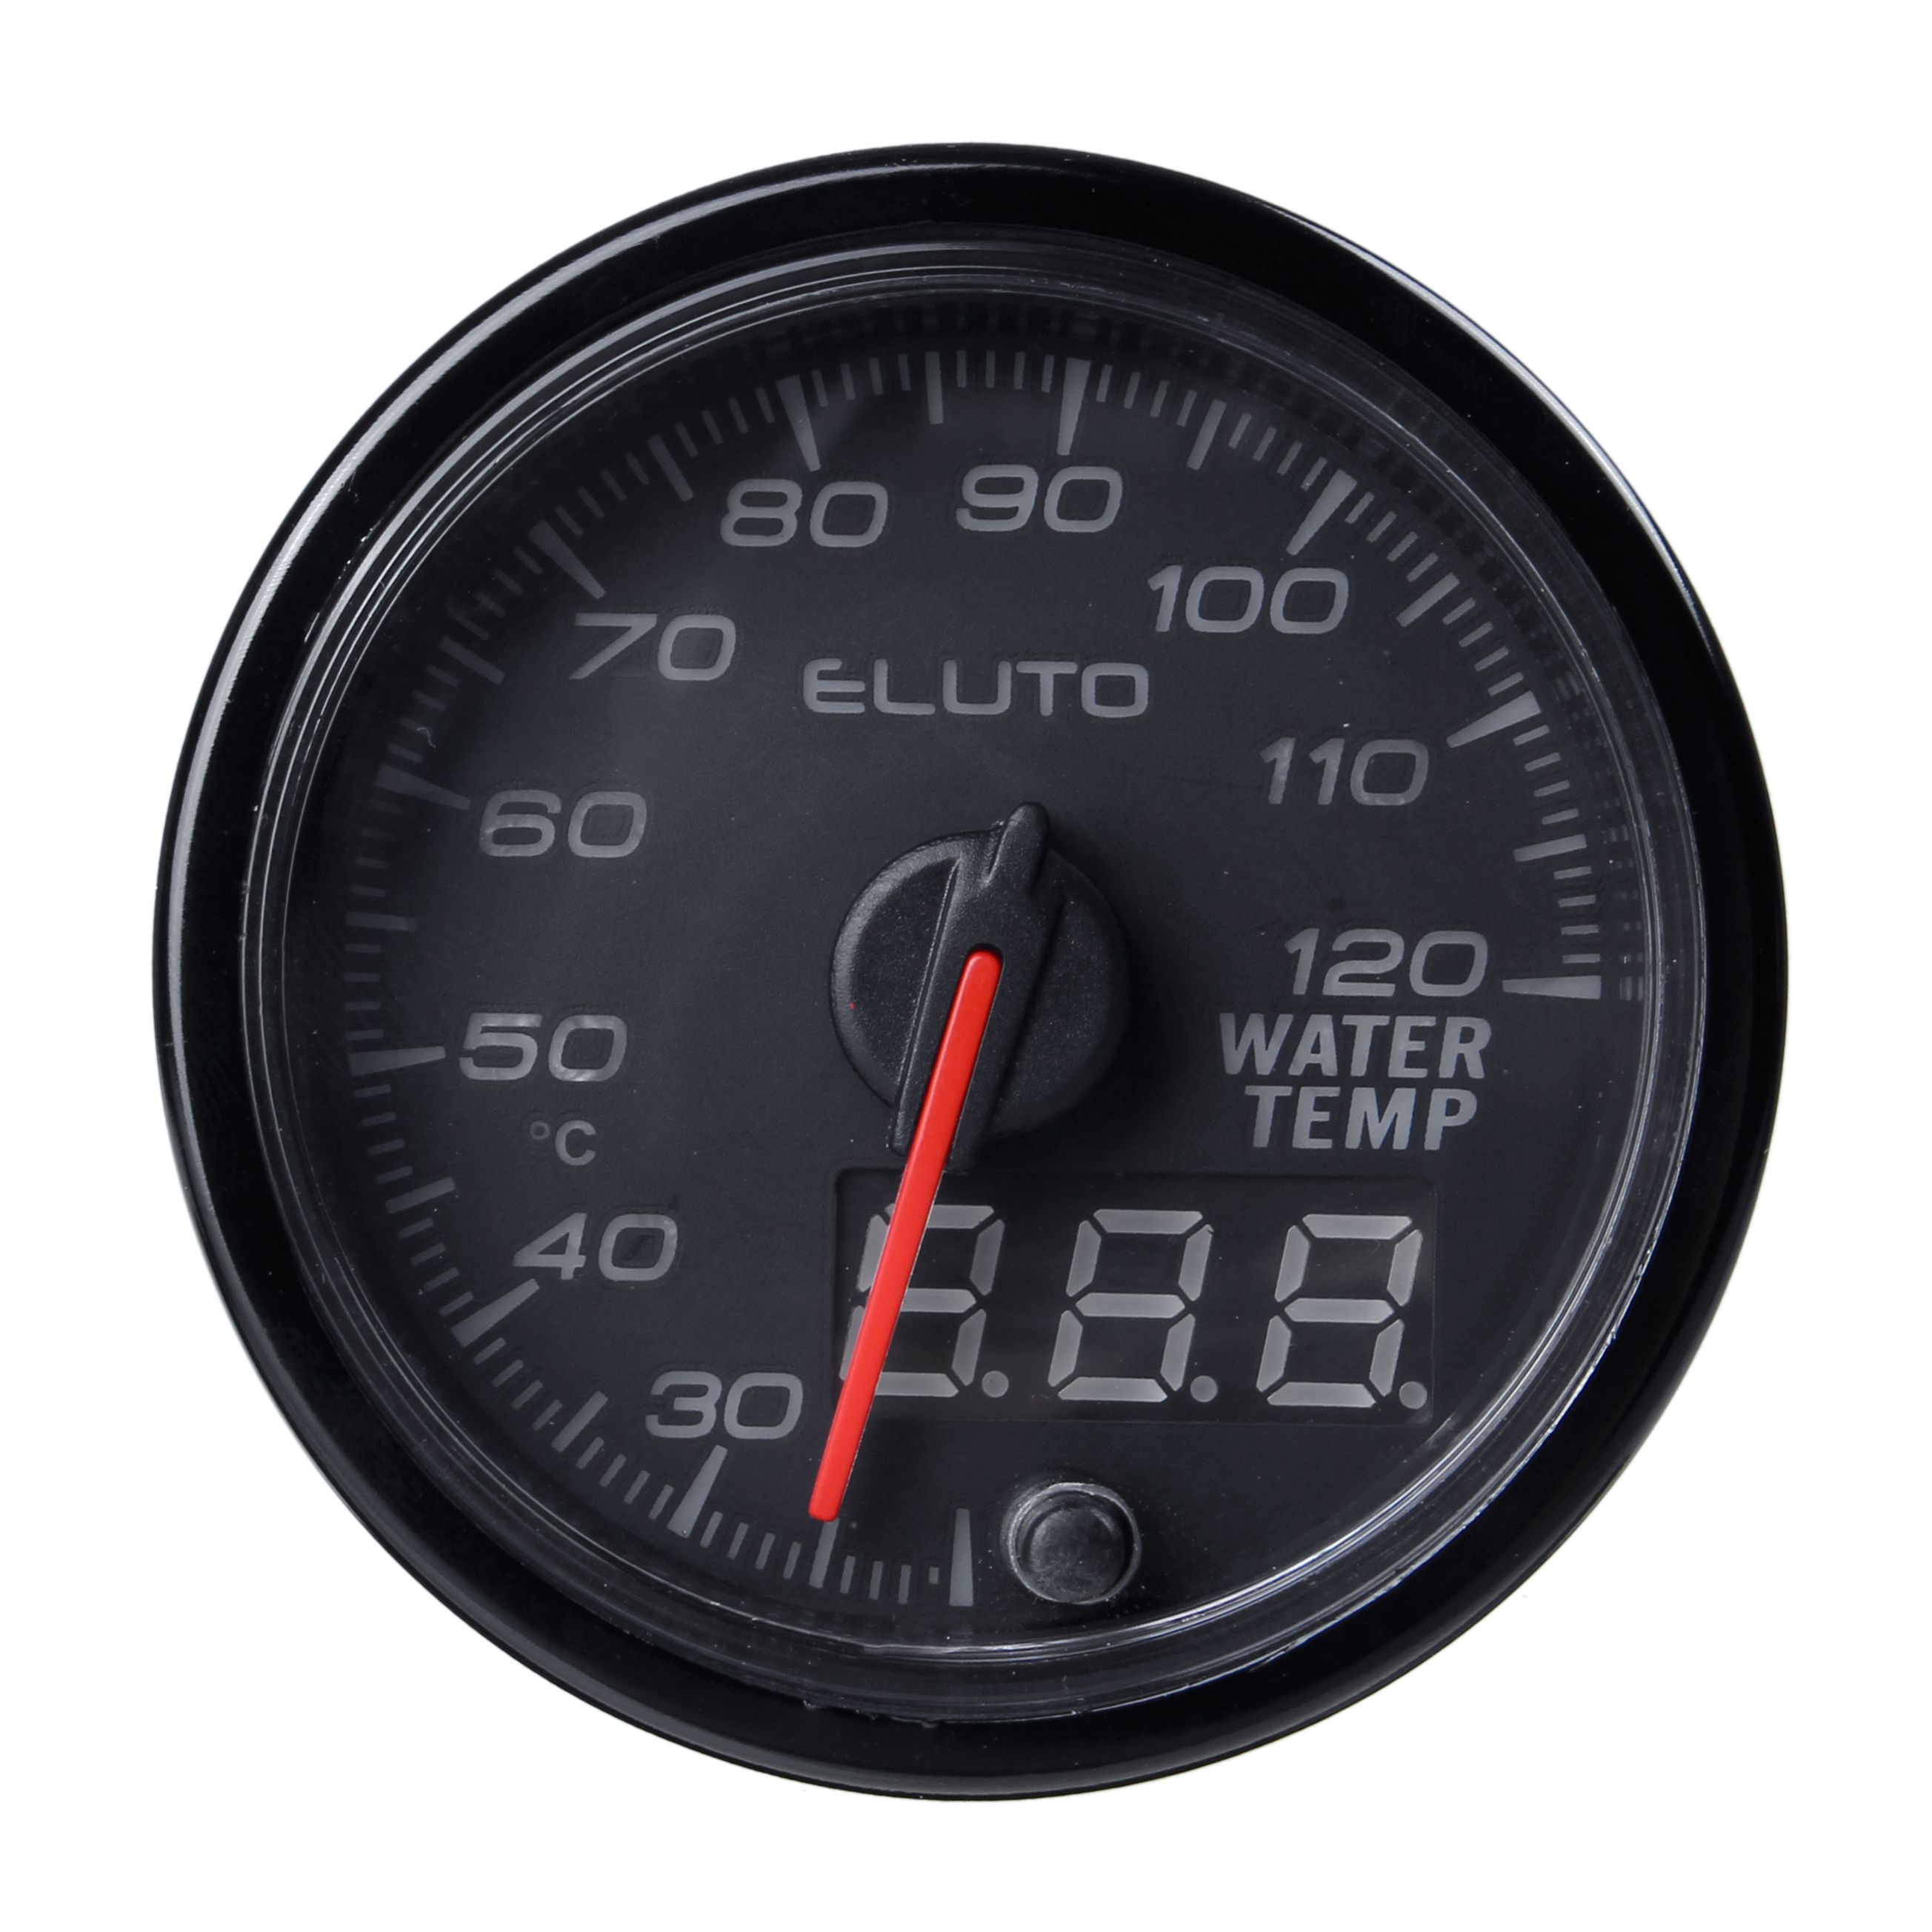 Eluto-Universal-Water-Temperature-Gauge-Digital-10-color-LED-Display-Car-Meter-2inch-52mm-1726779